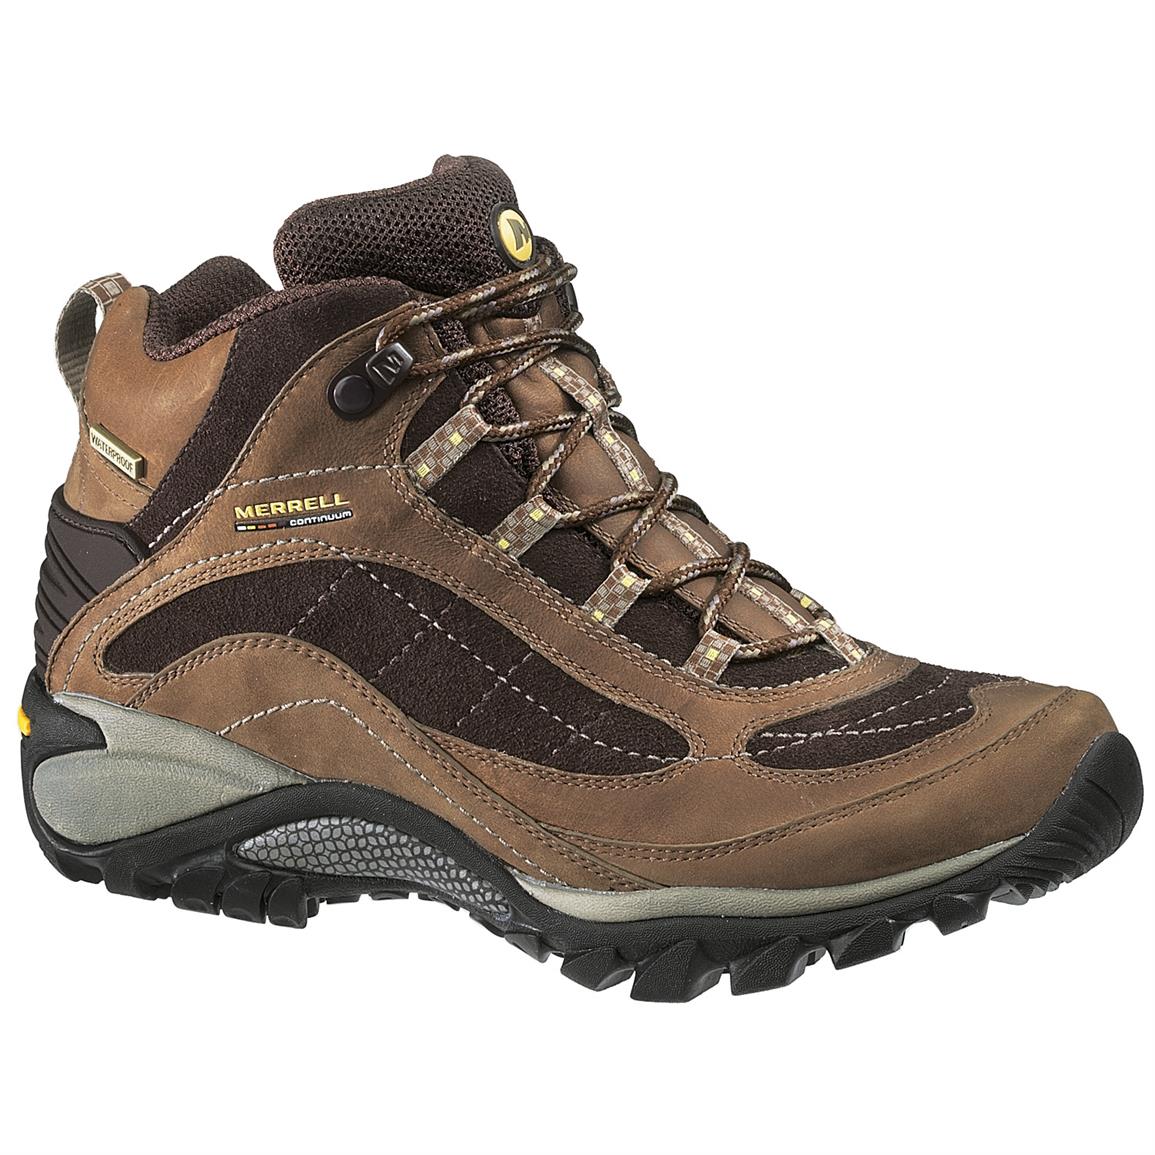 Women's Merrell Siren Hiking Boots, Waterproof, Mid - 654150, Hiking